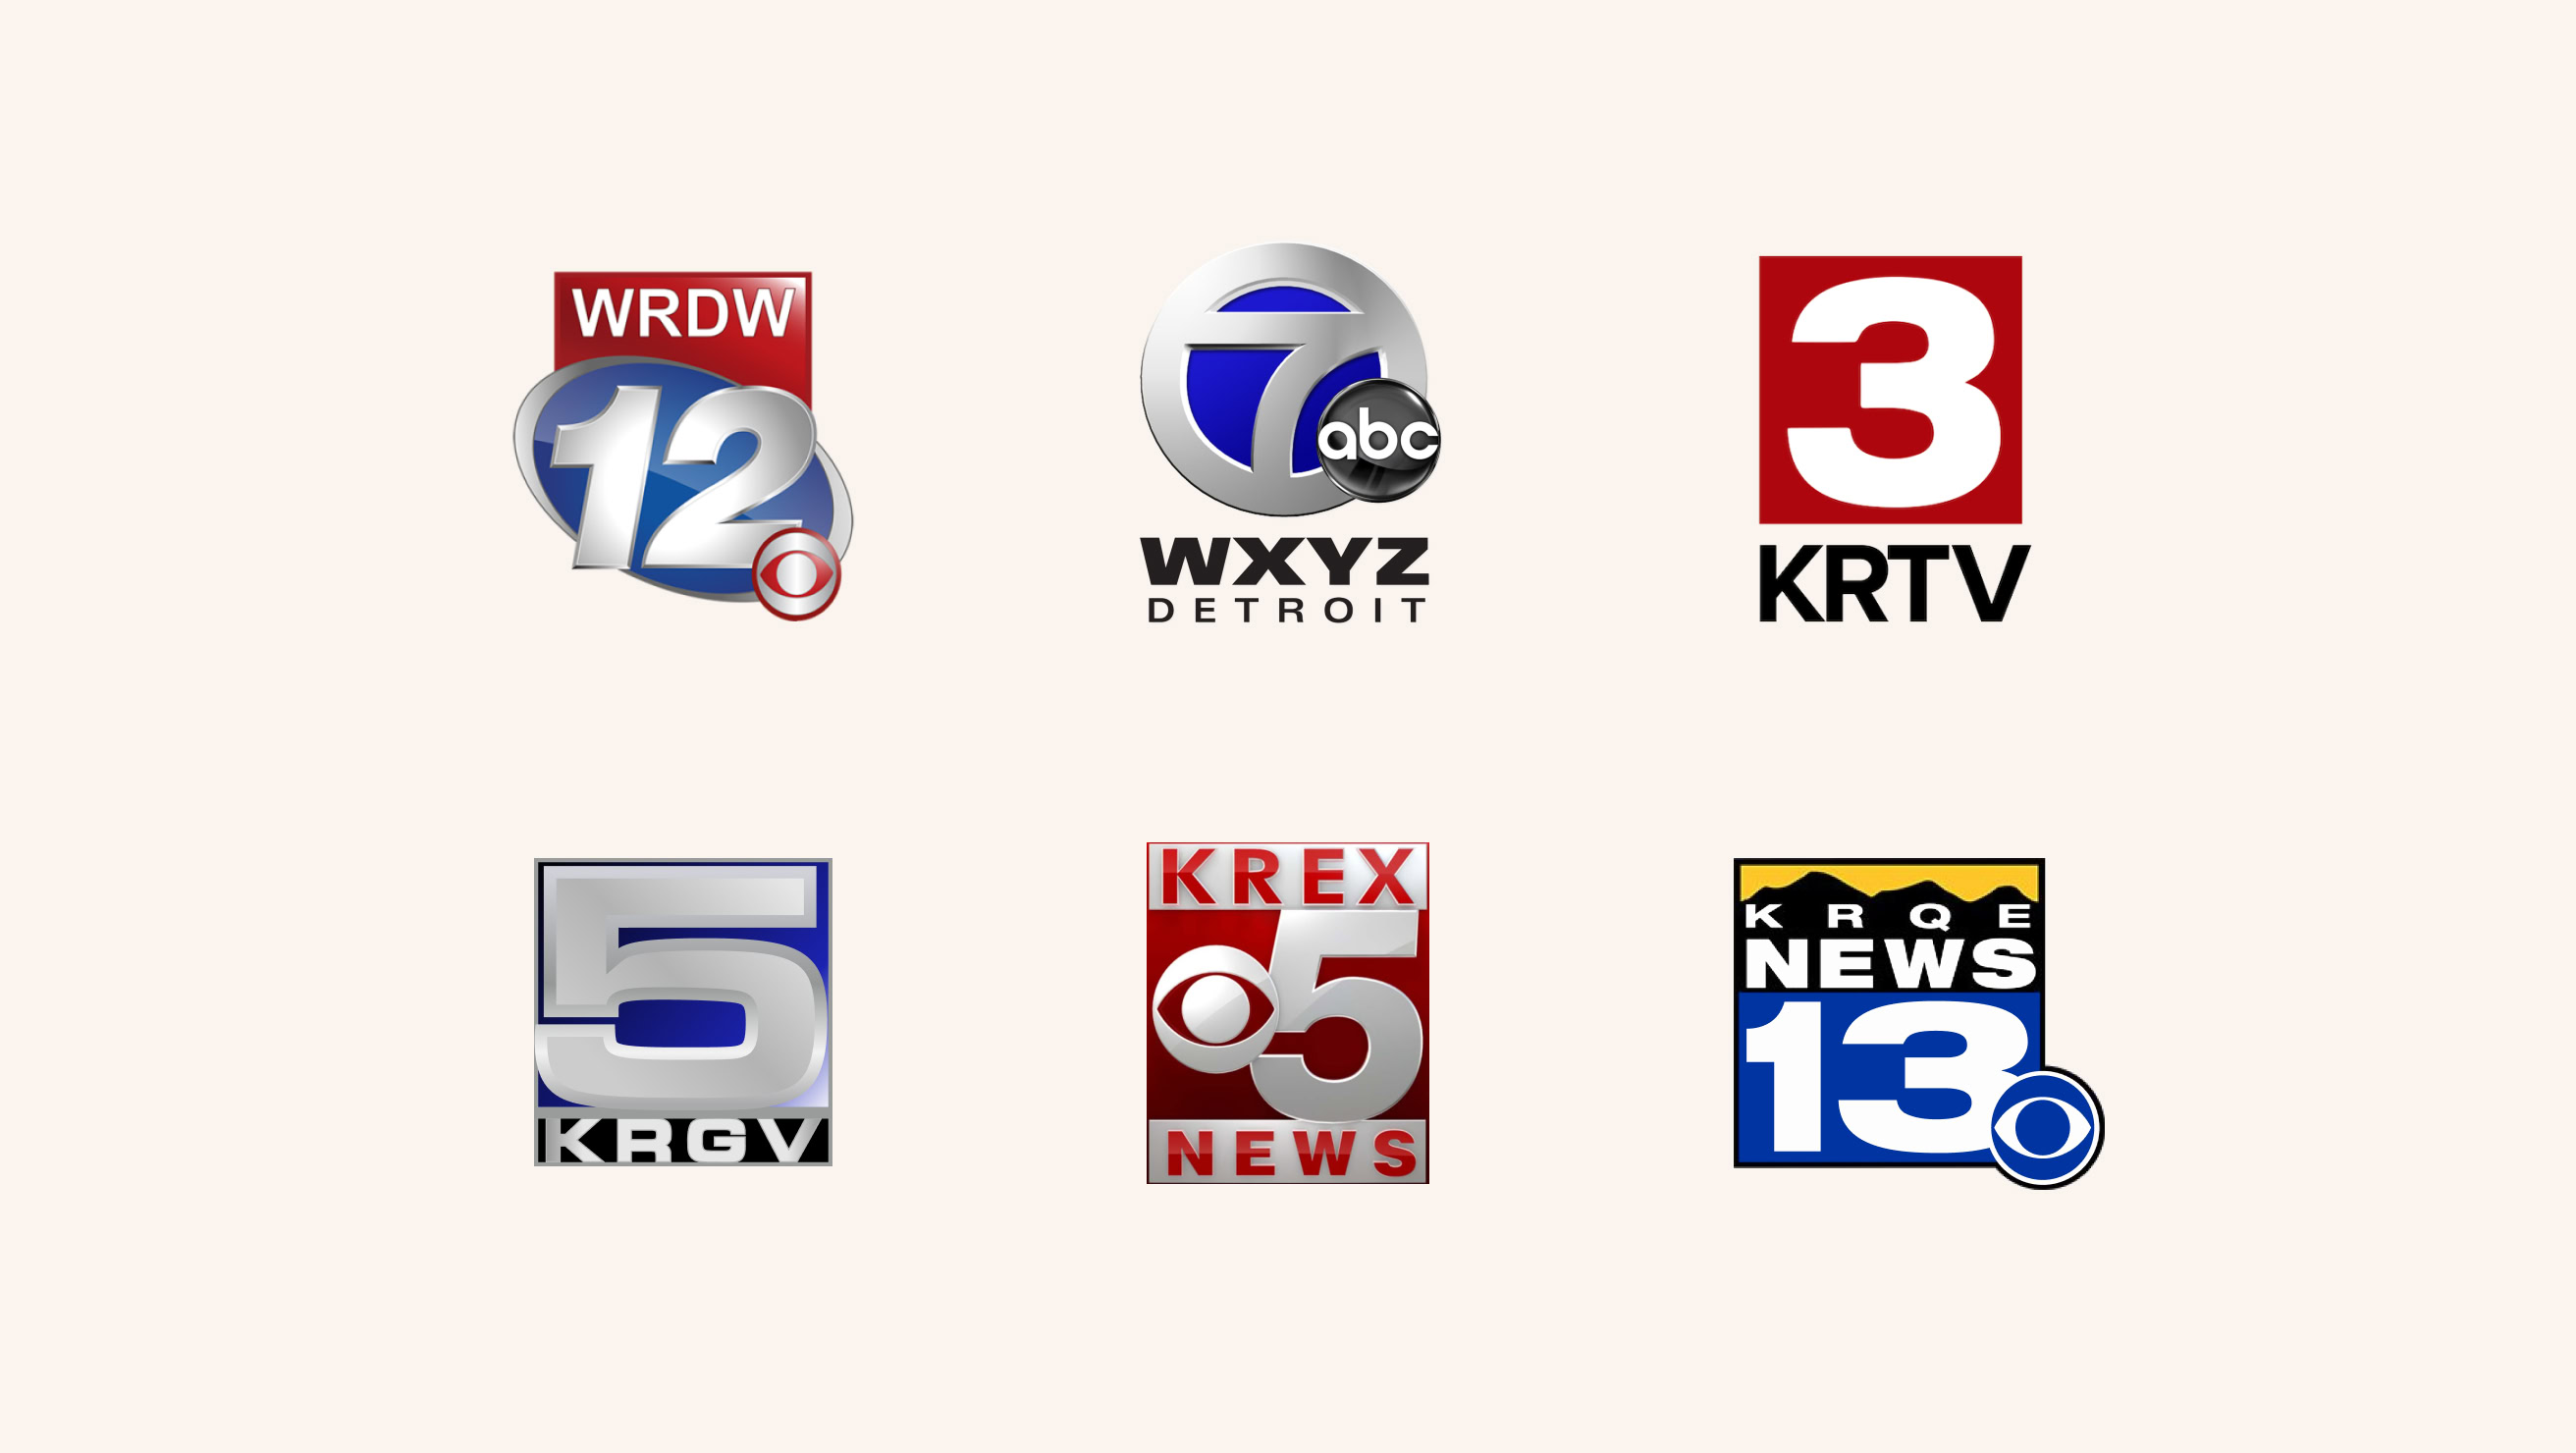 Logos of six different american tv stations: WRDW 12, WXYZ 7 ABC Detroit, KRTV 3, KRGV 5, KREX 5 News, and KRGE News 13.